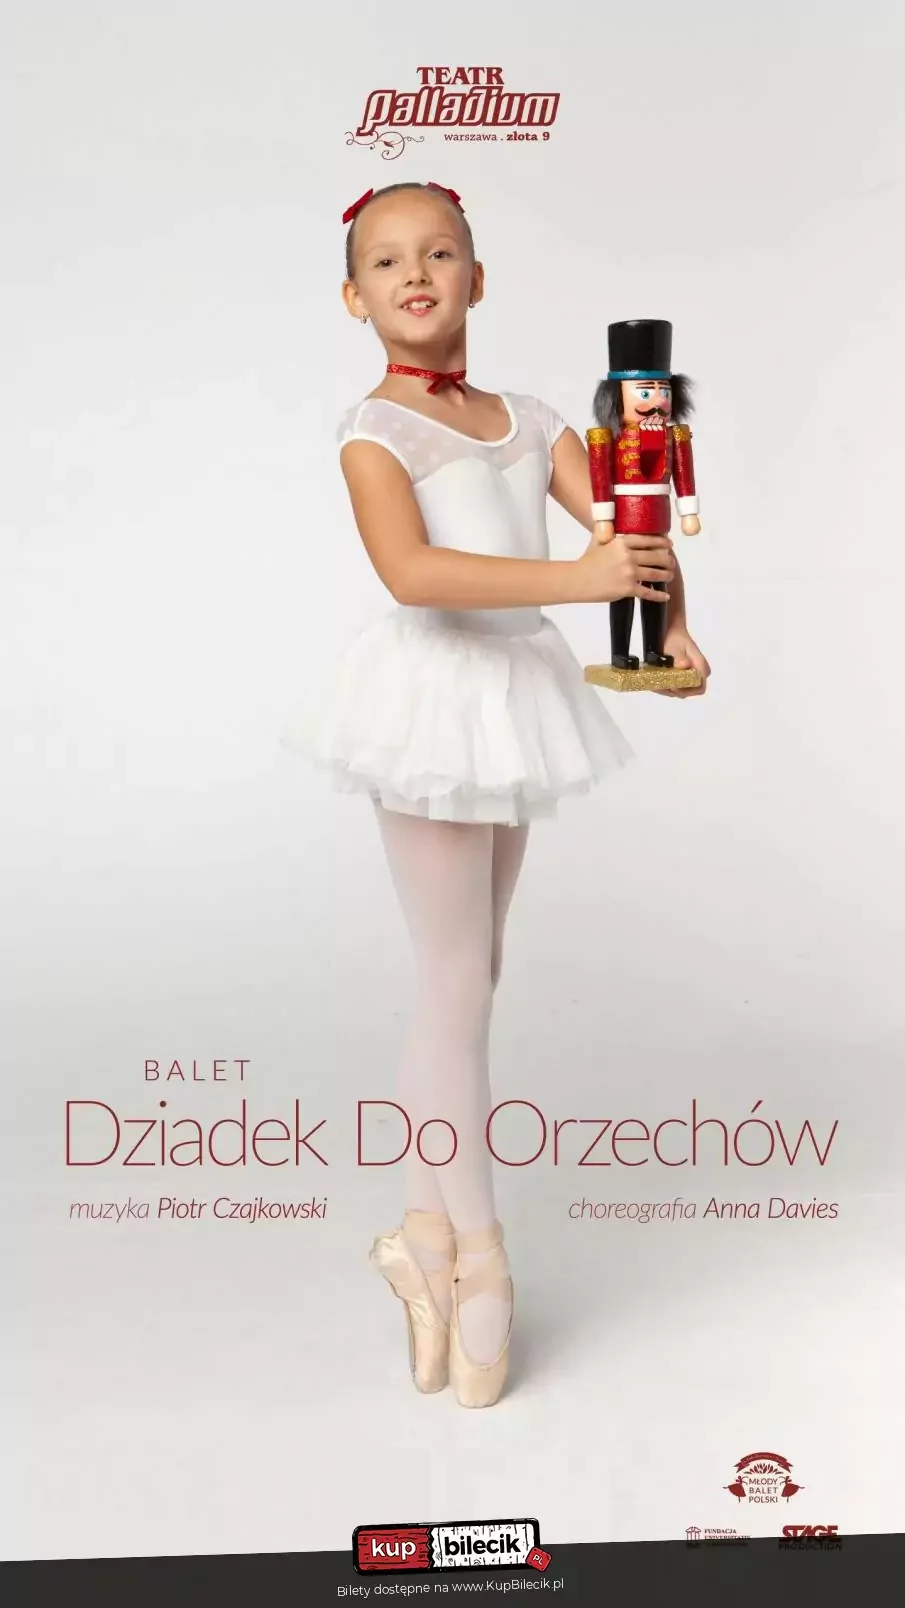 Balet Dziadek do orzechów